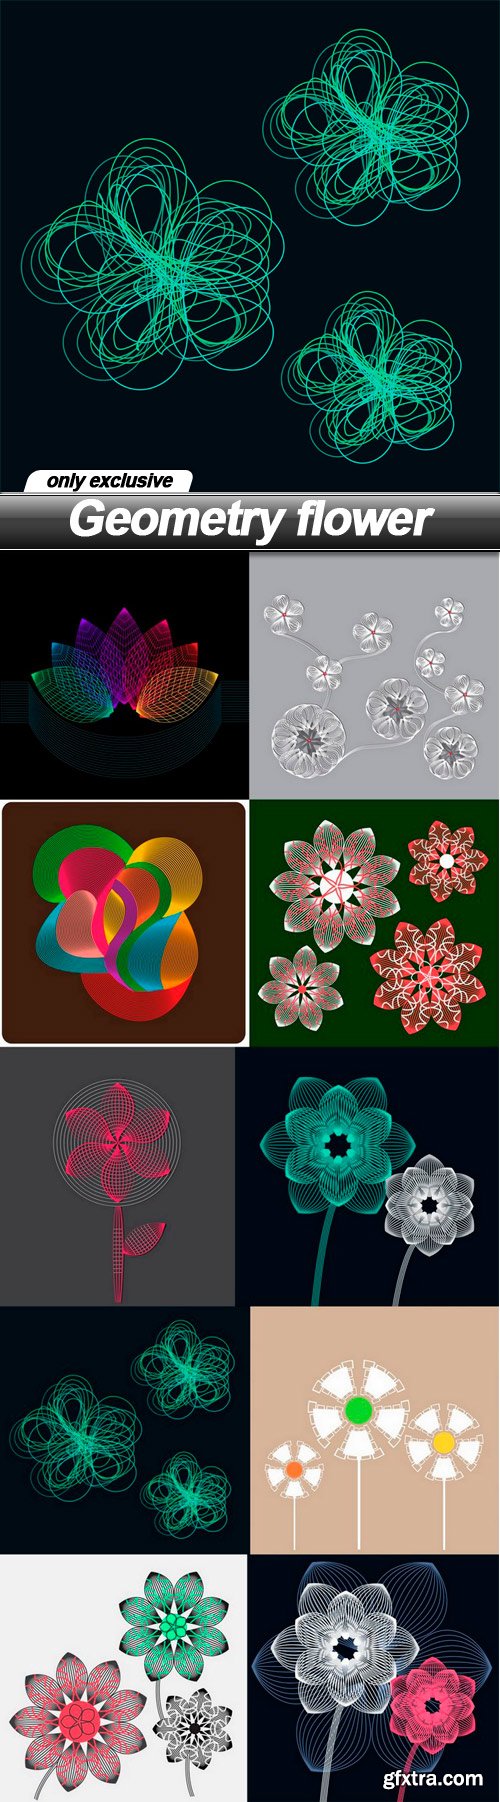 Geometry flower - 10 EPS